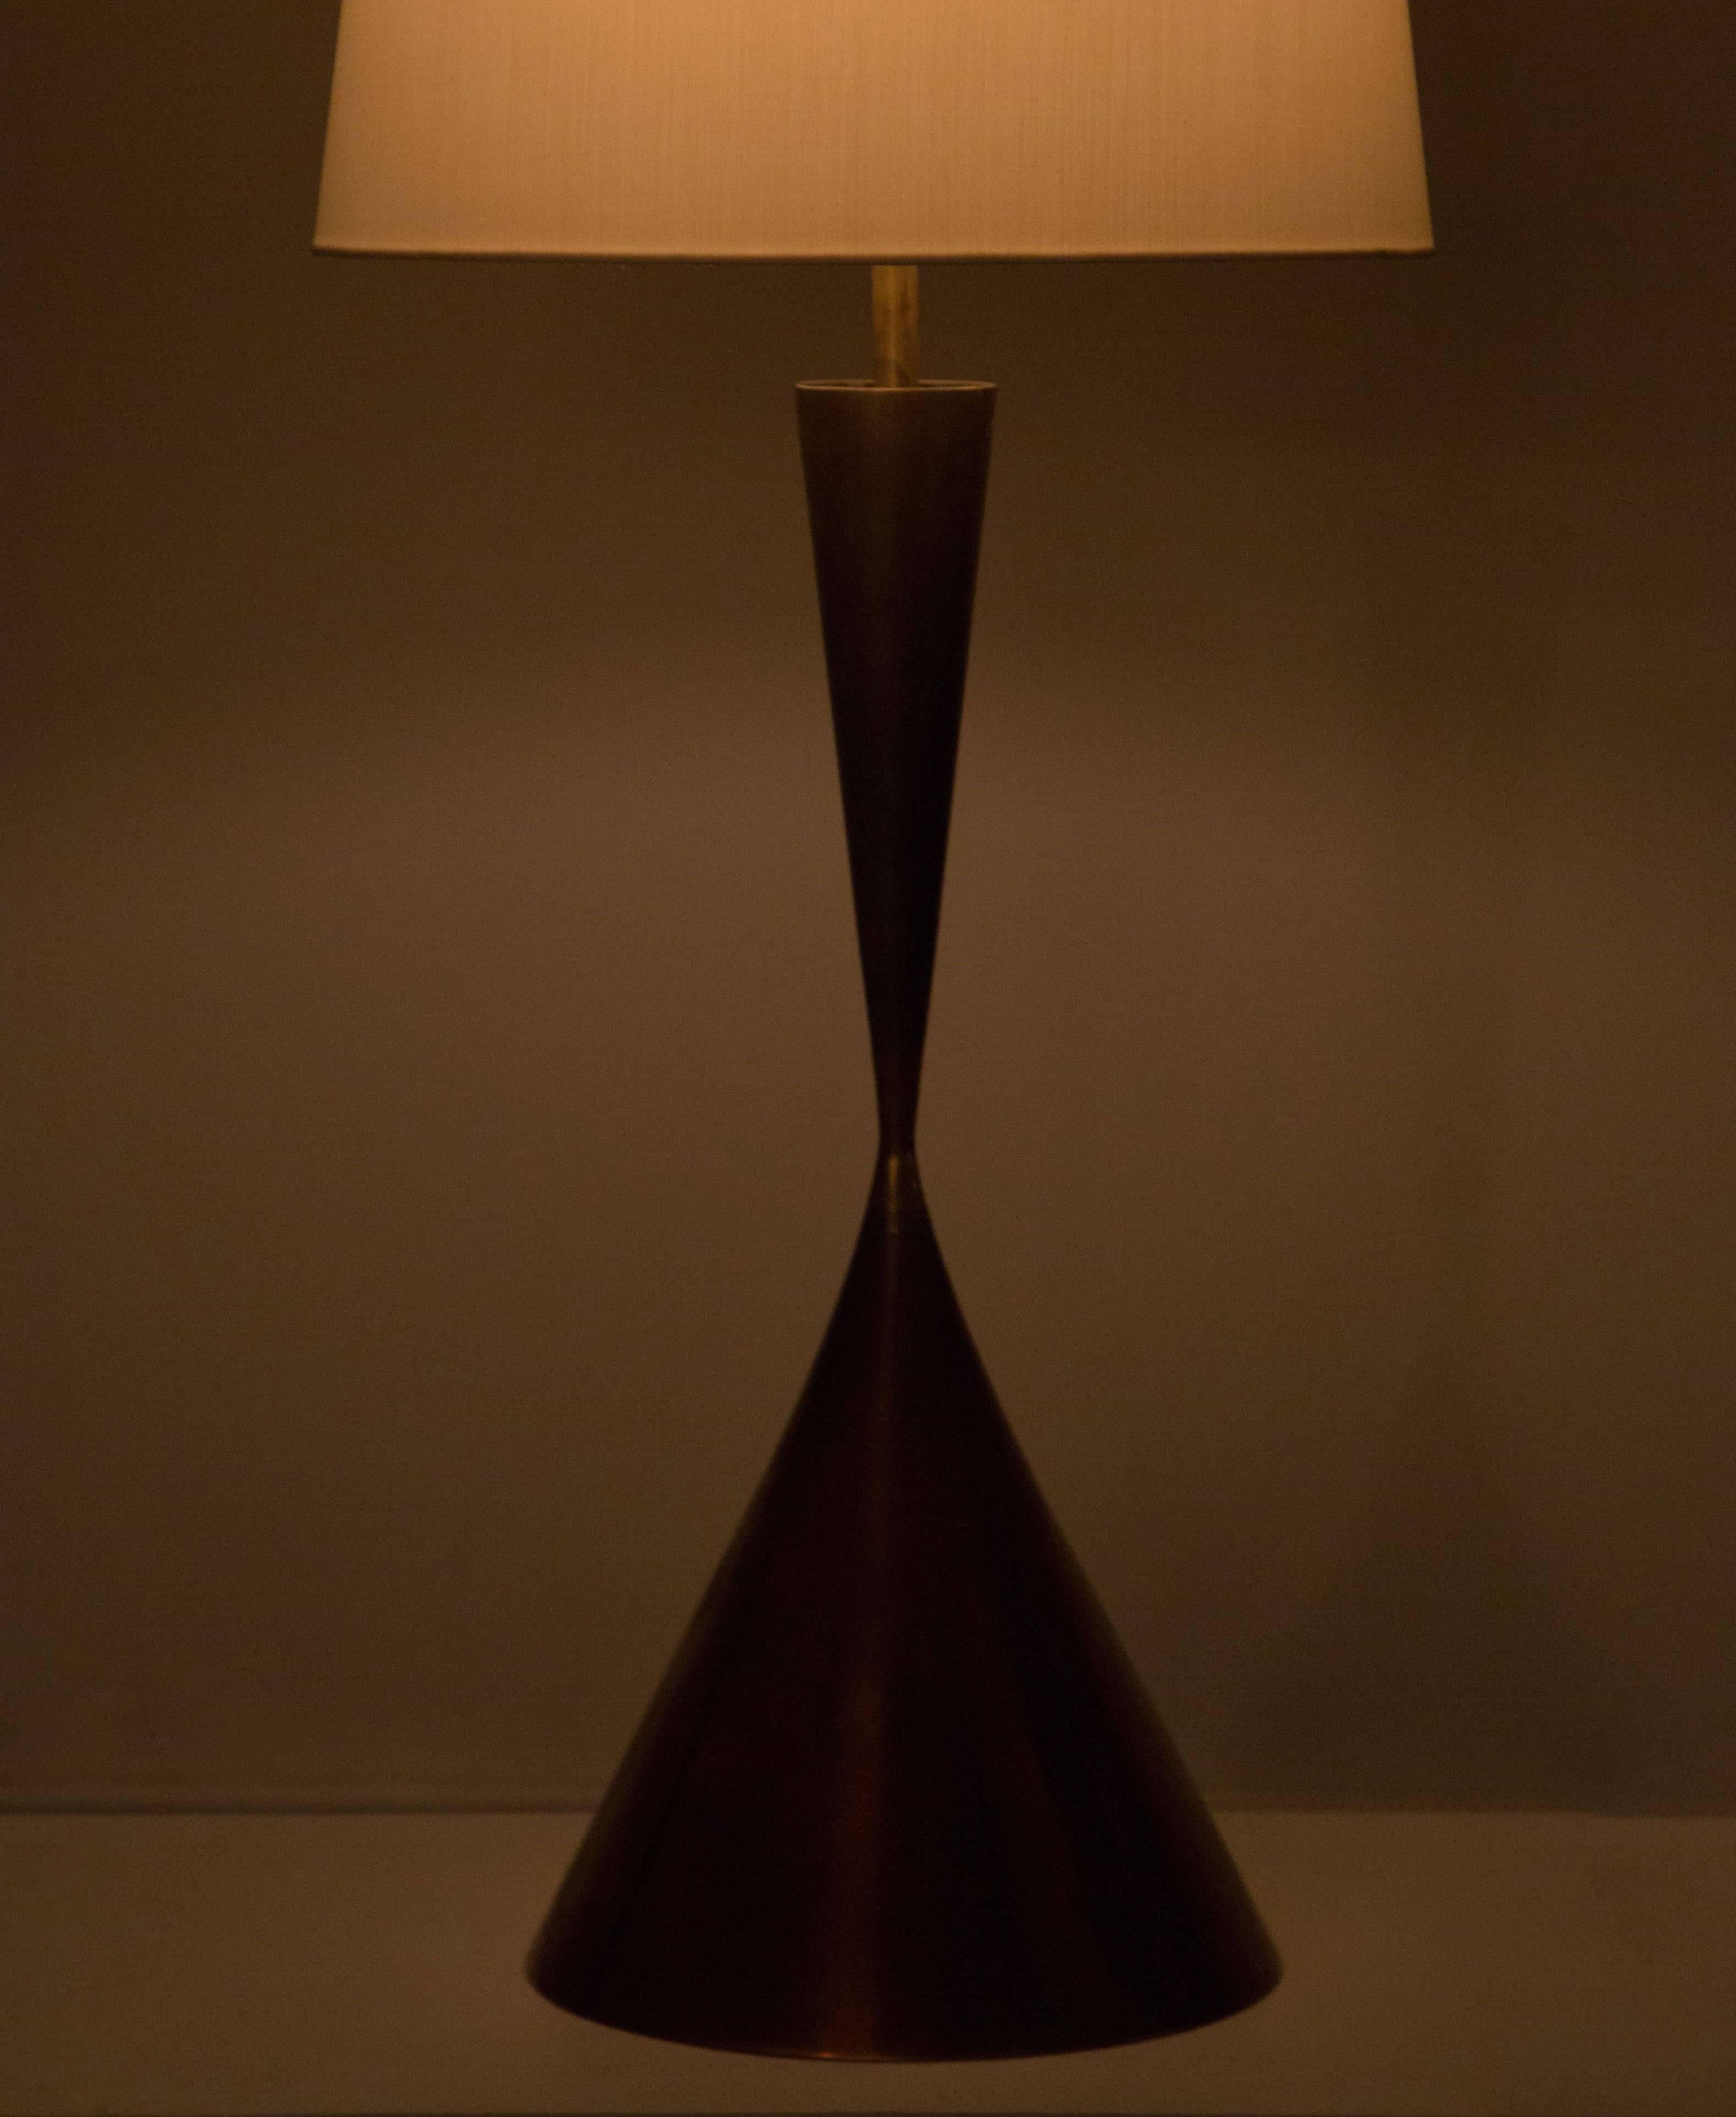 Brass table lamp by Arredoluce.